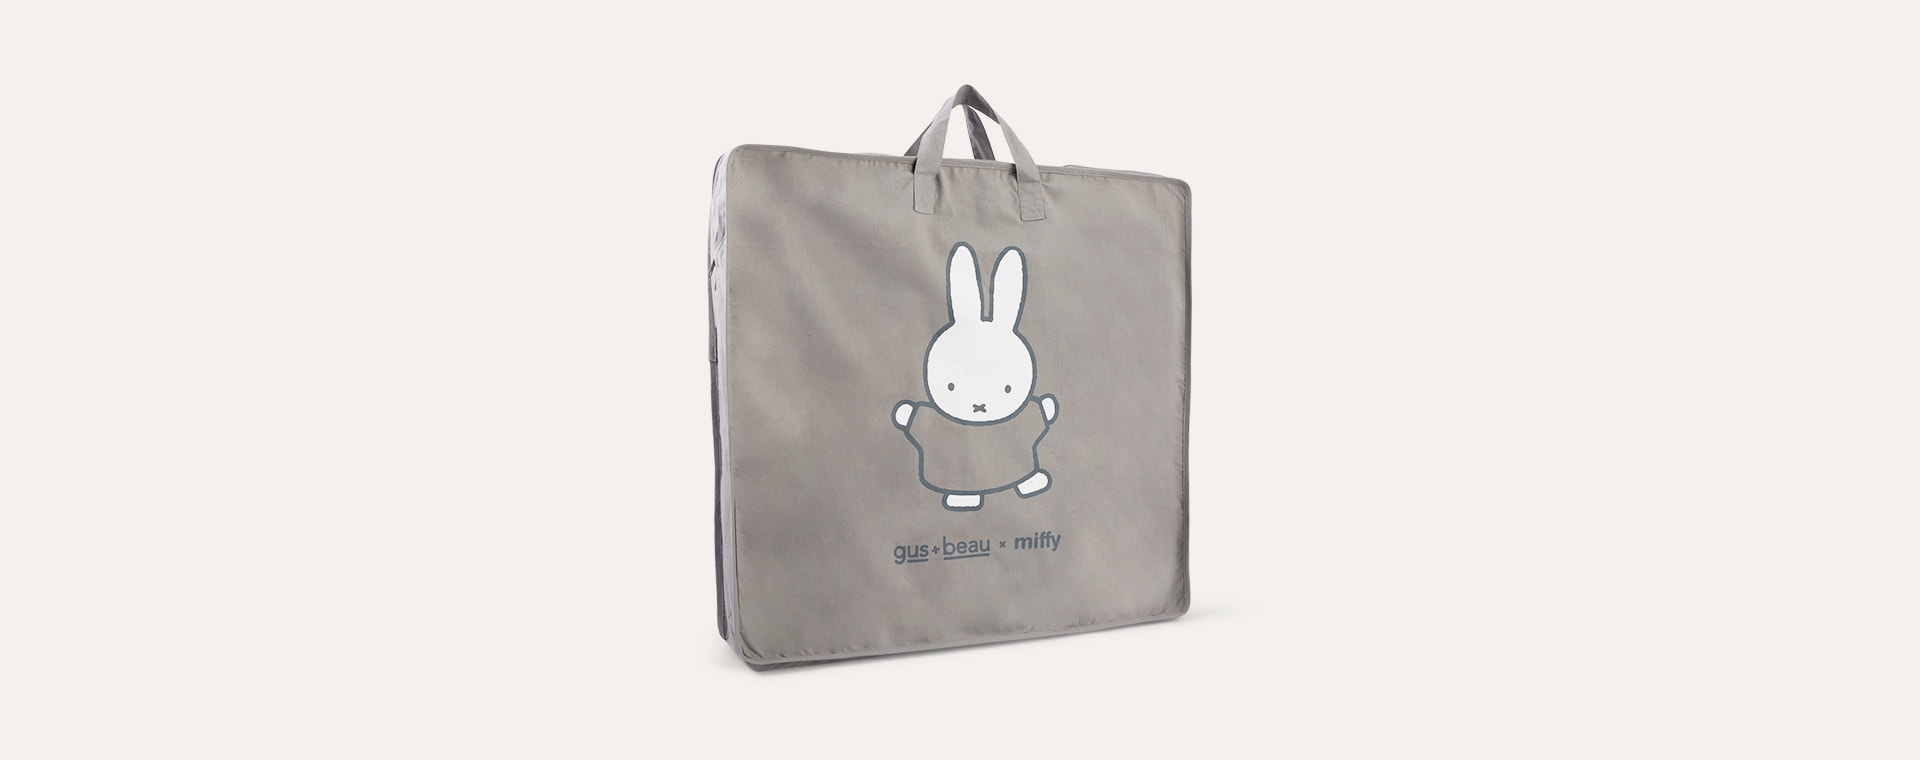 Grey gus & beau Miffy Playmat Storage Bag